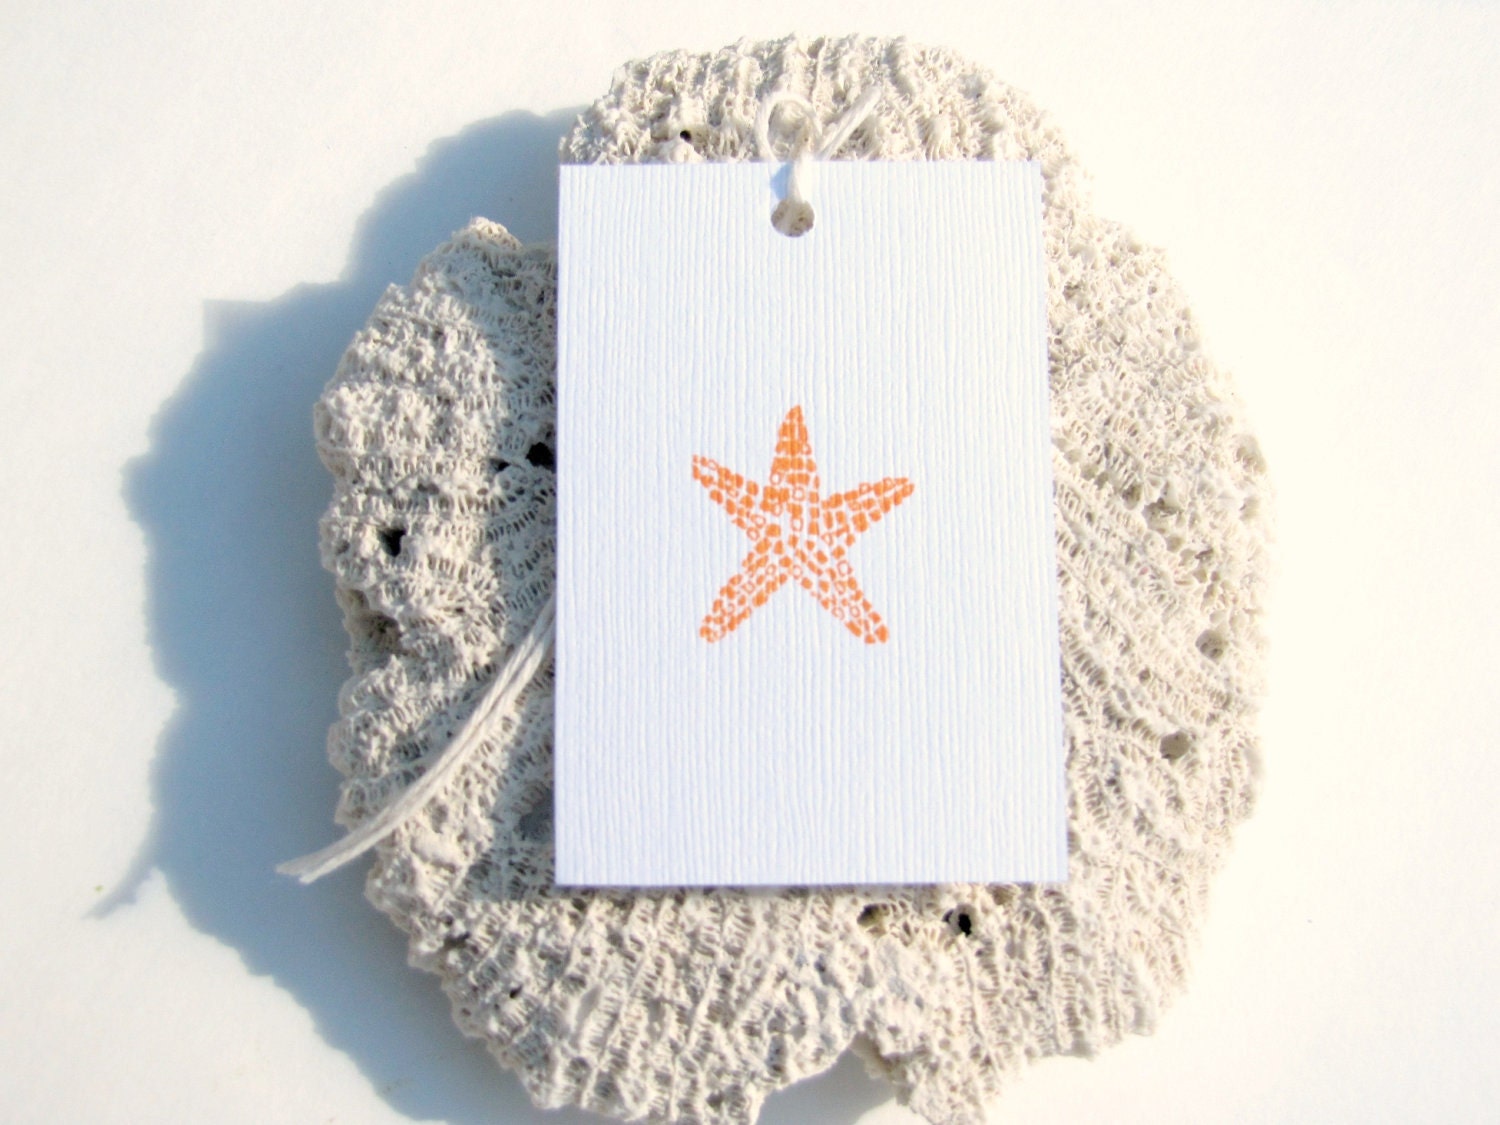 50 Starfish Gift tags/Favor tags. Orange Starfish Tags by KiwiTiniCreations, starfish favors - KiwiTiniCreations